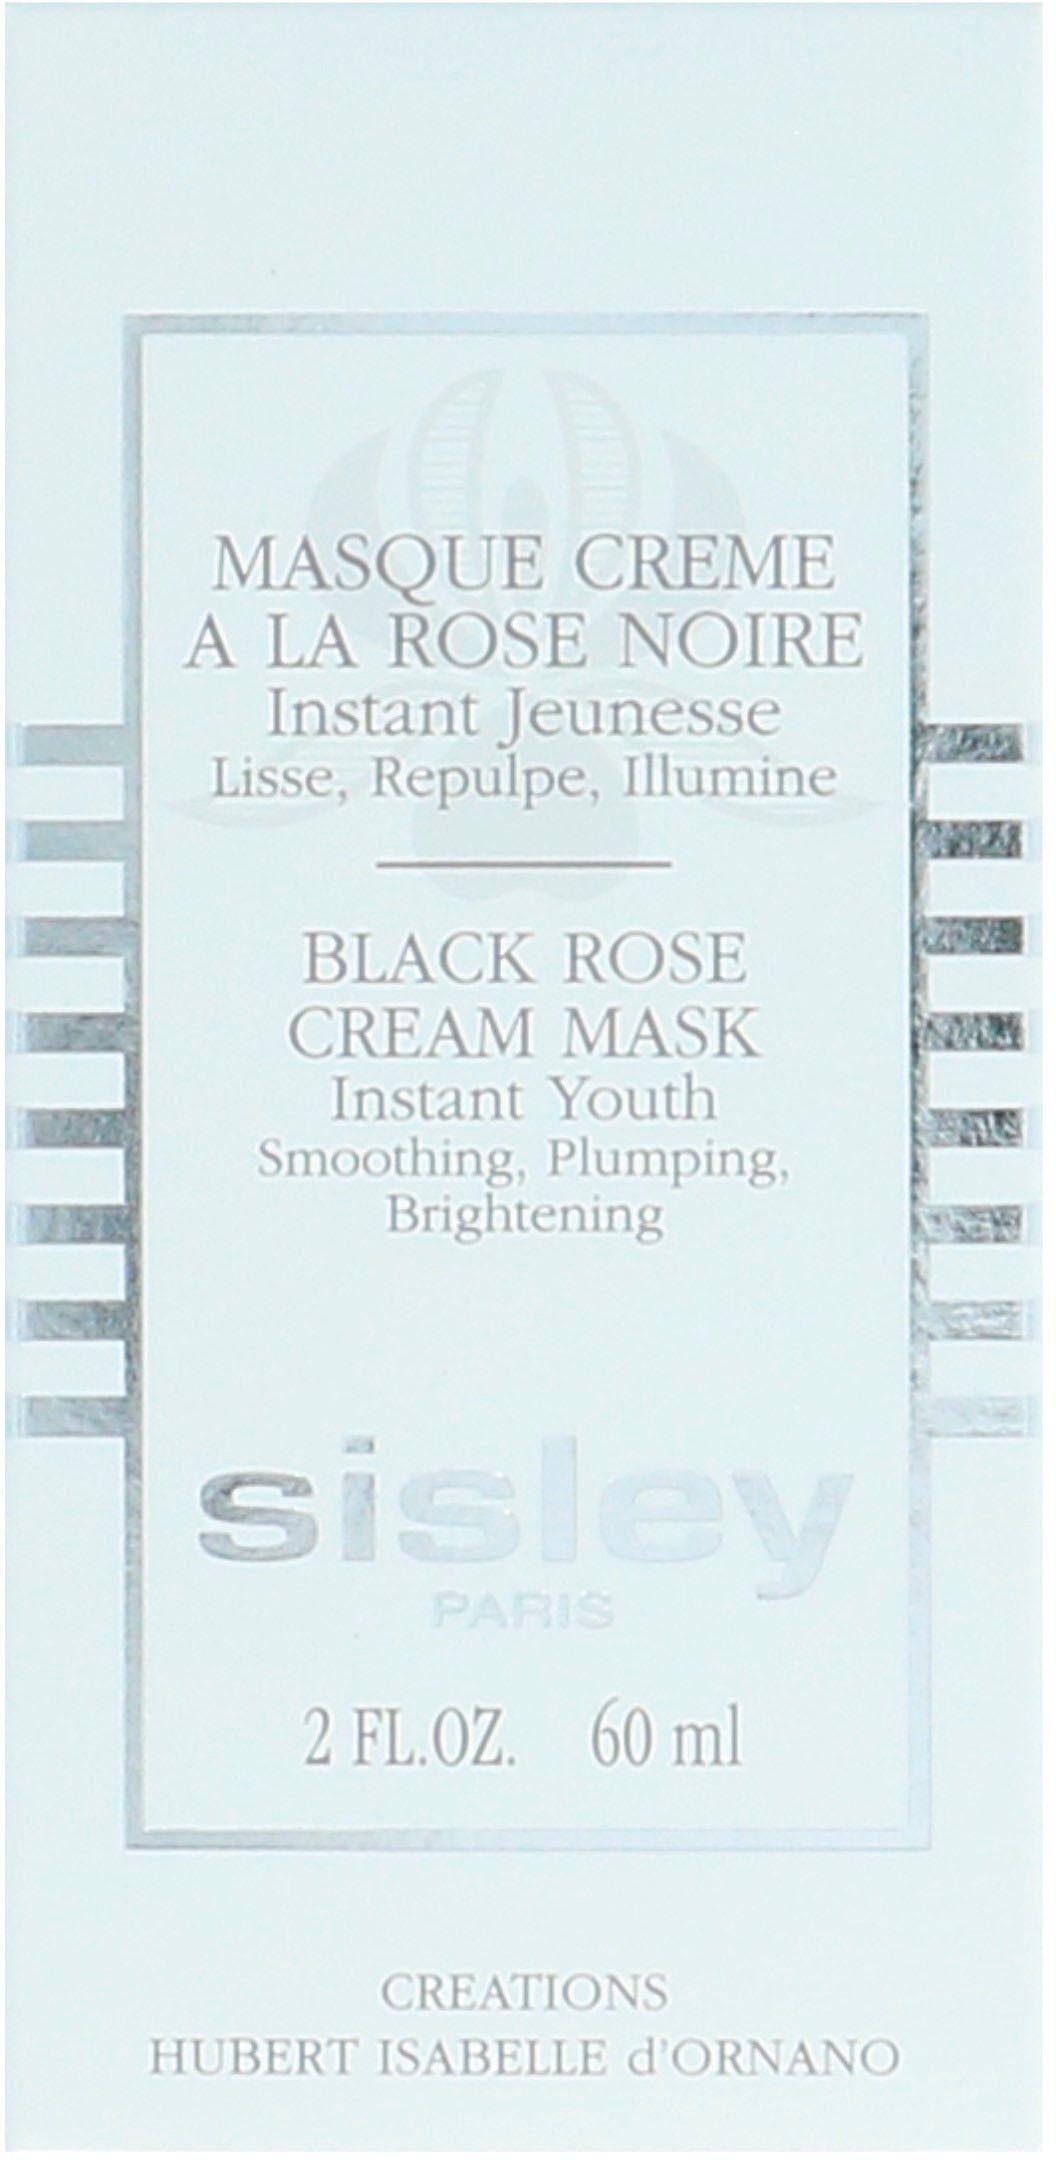 Gesichtsmaske Cream Black Mask Rose sisley